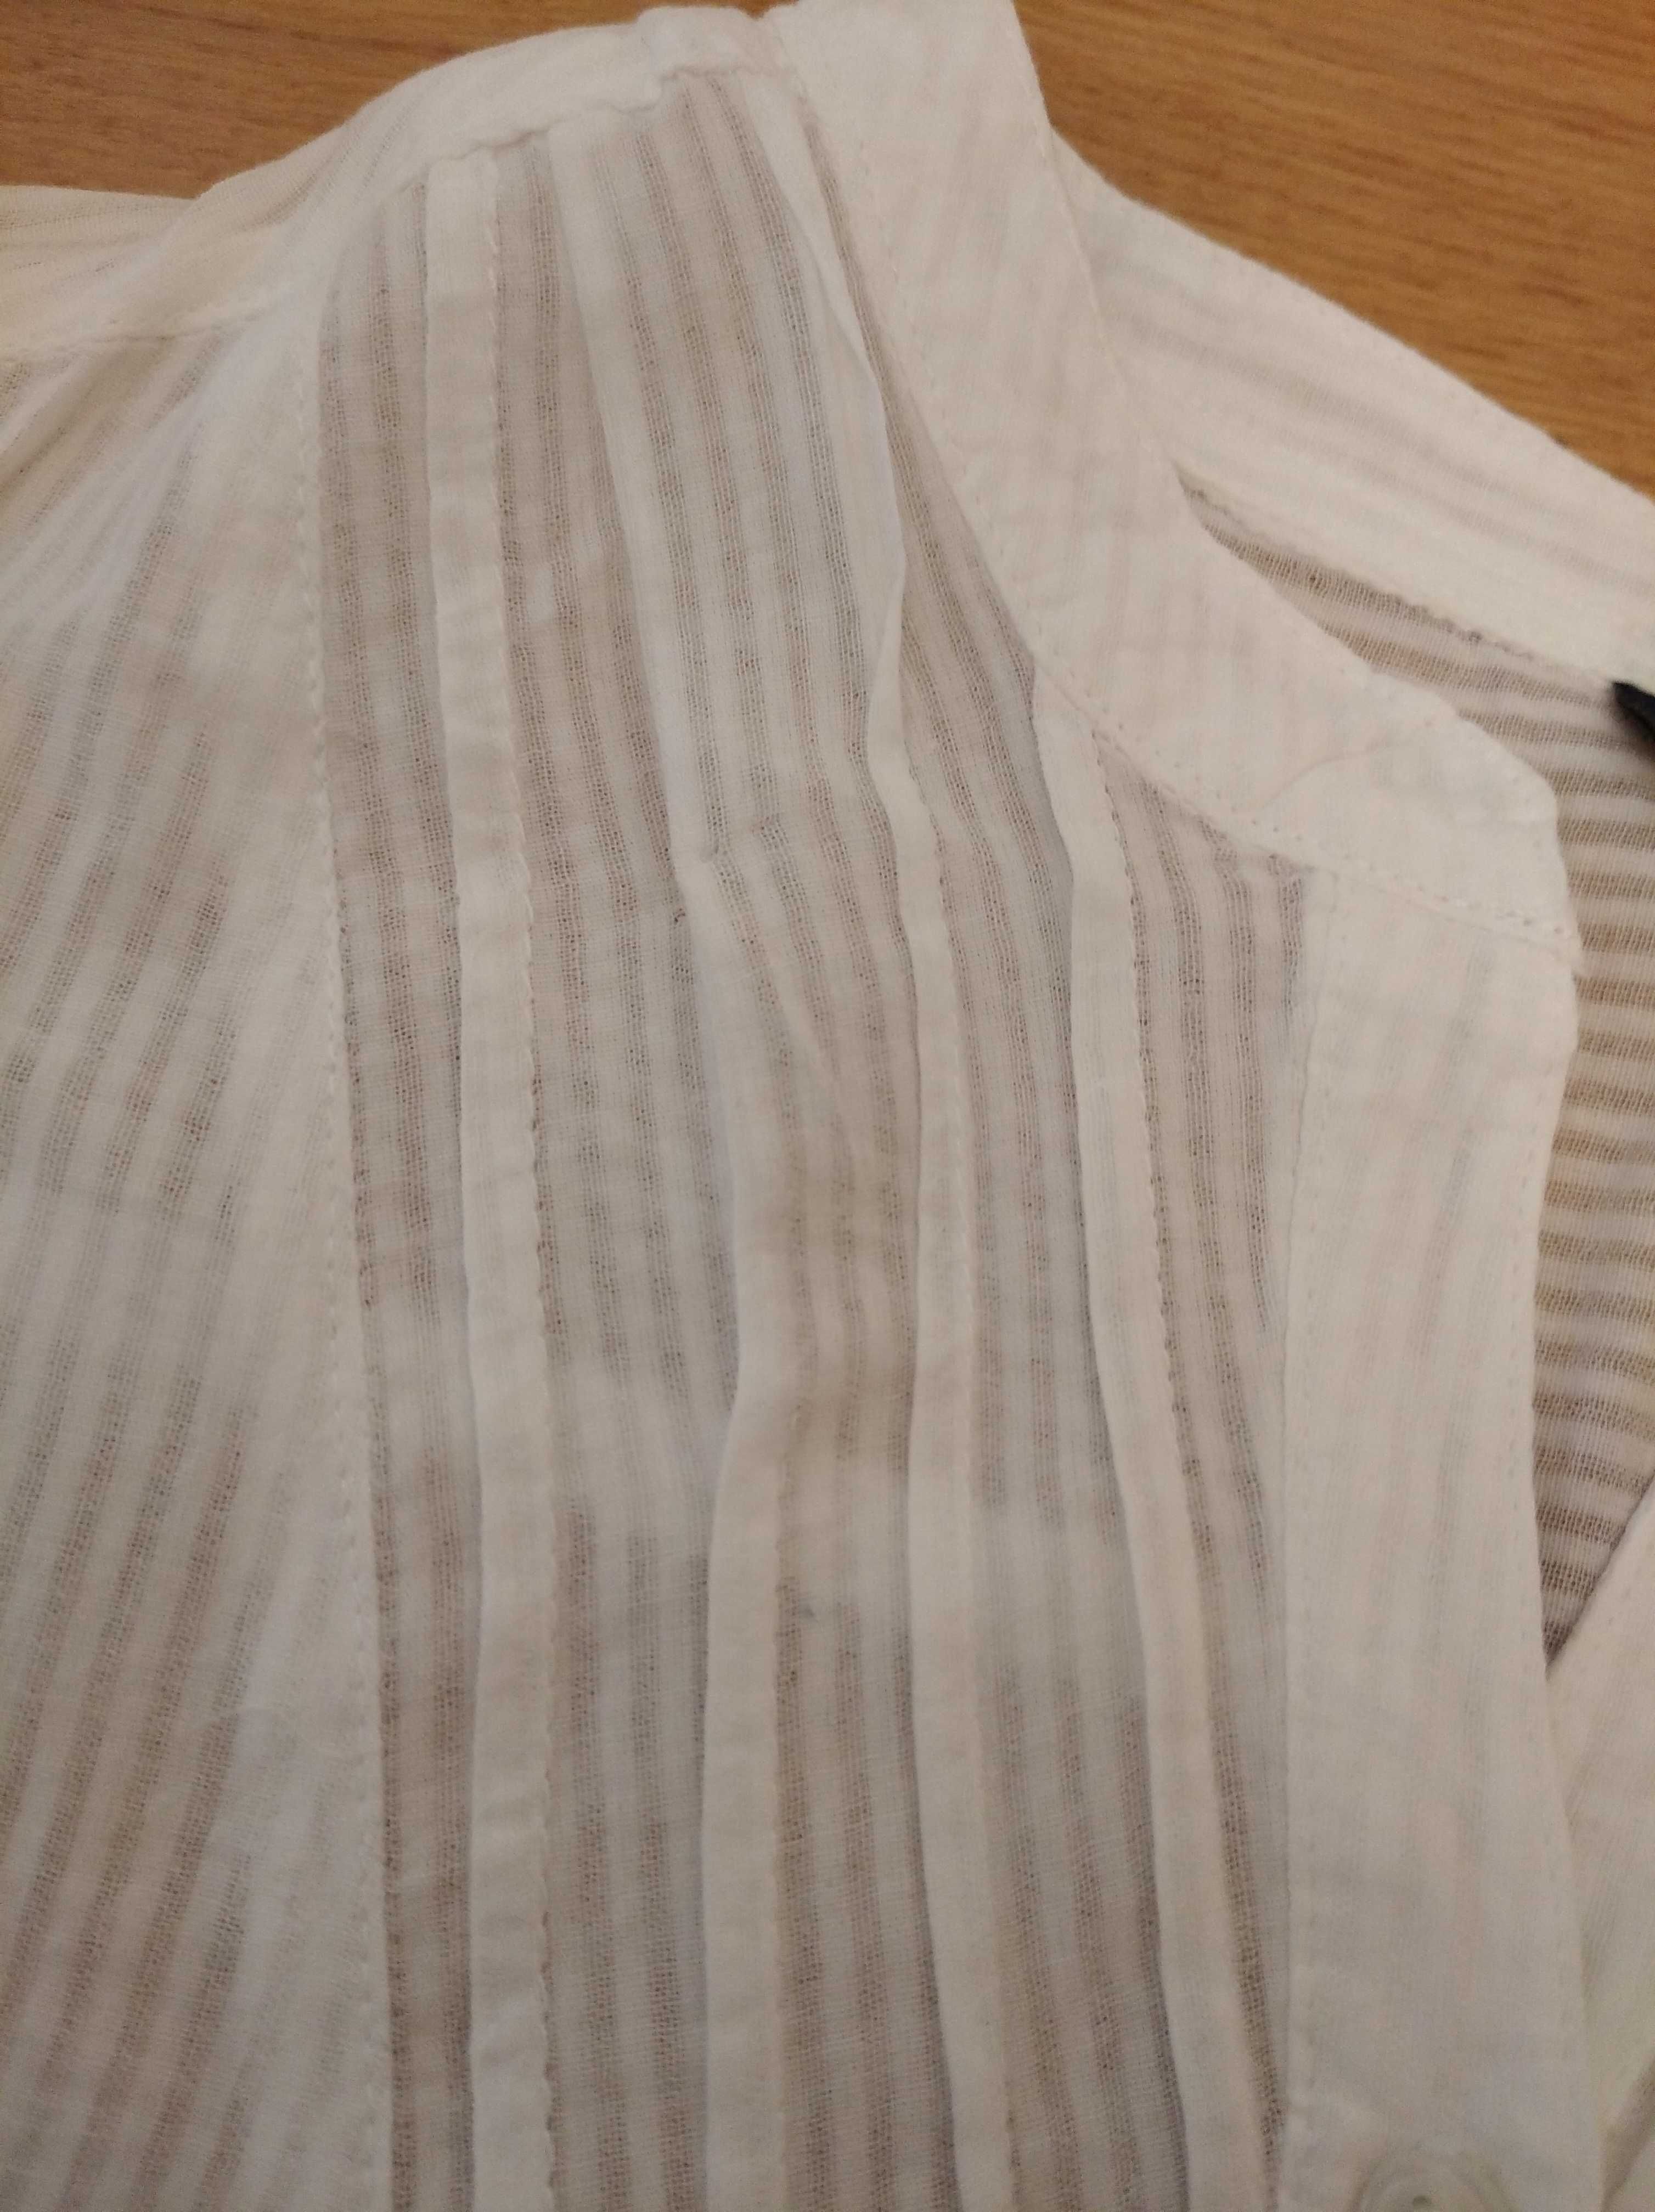 Bluzka damska Esmara 40 biała delikatna falbanki tunika koszula